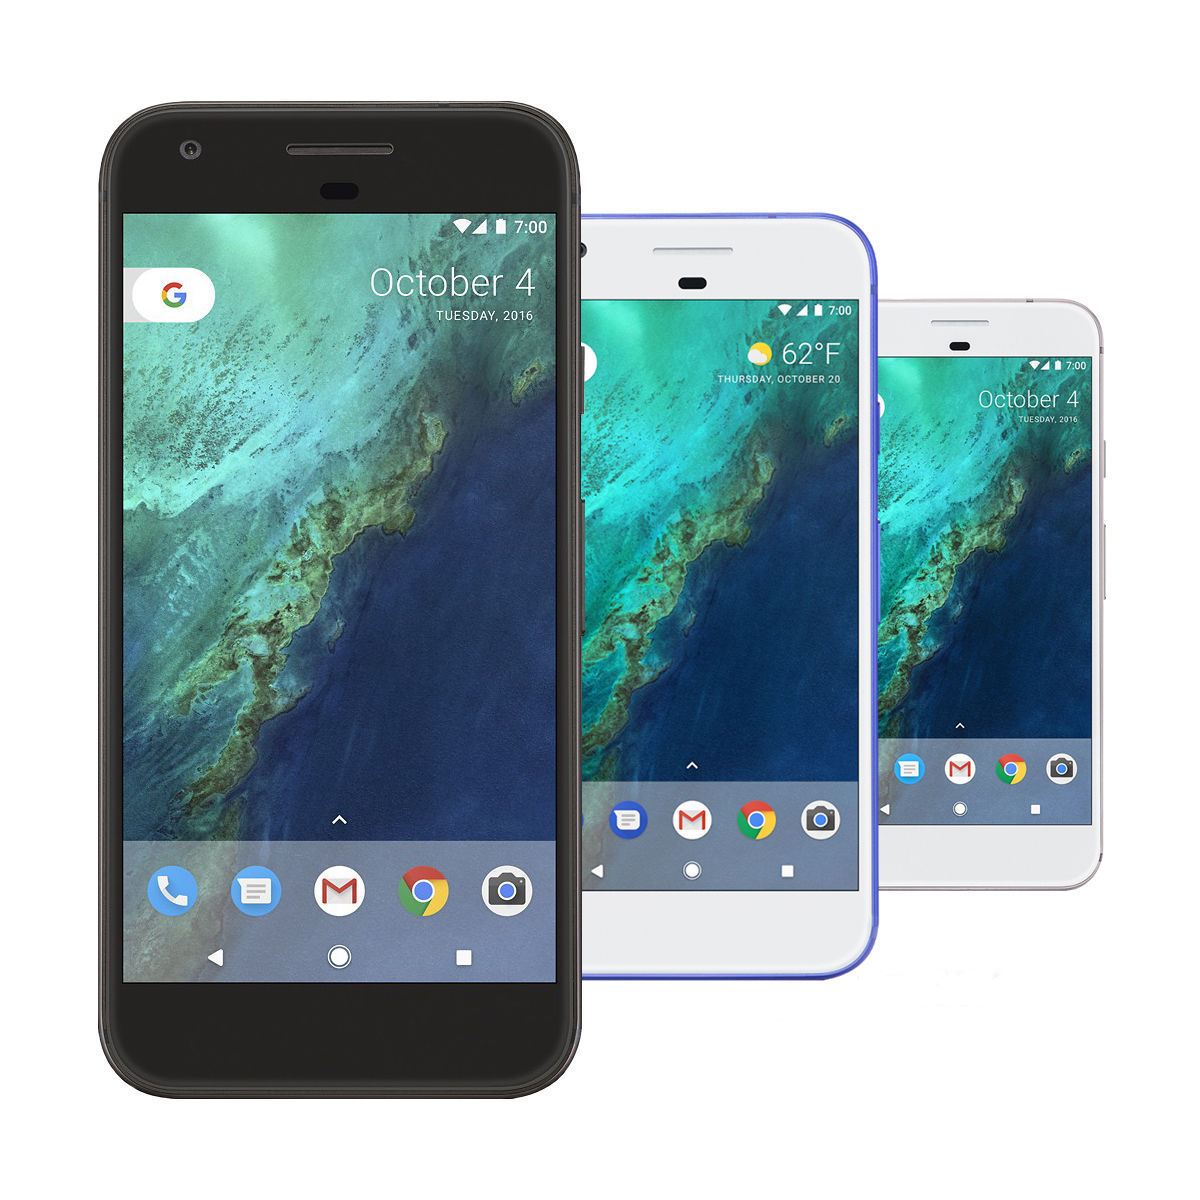 Google Pixel XL 32GB Verizon 4G LTE Android WiFi Smartphone Black & SIlver - $125.00